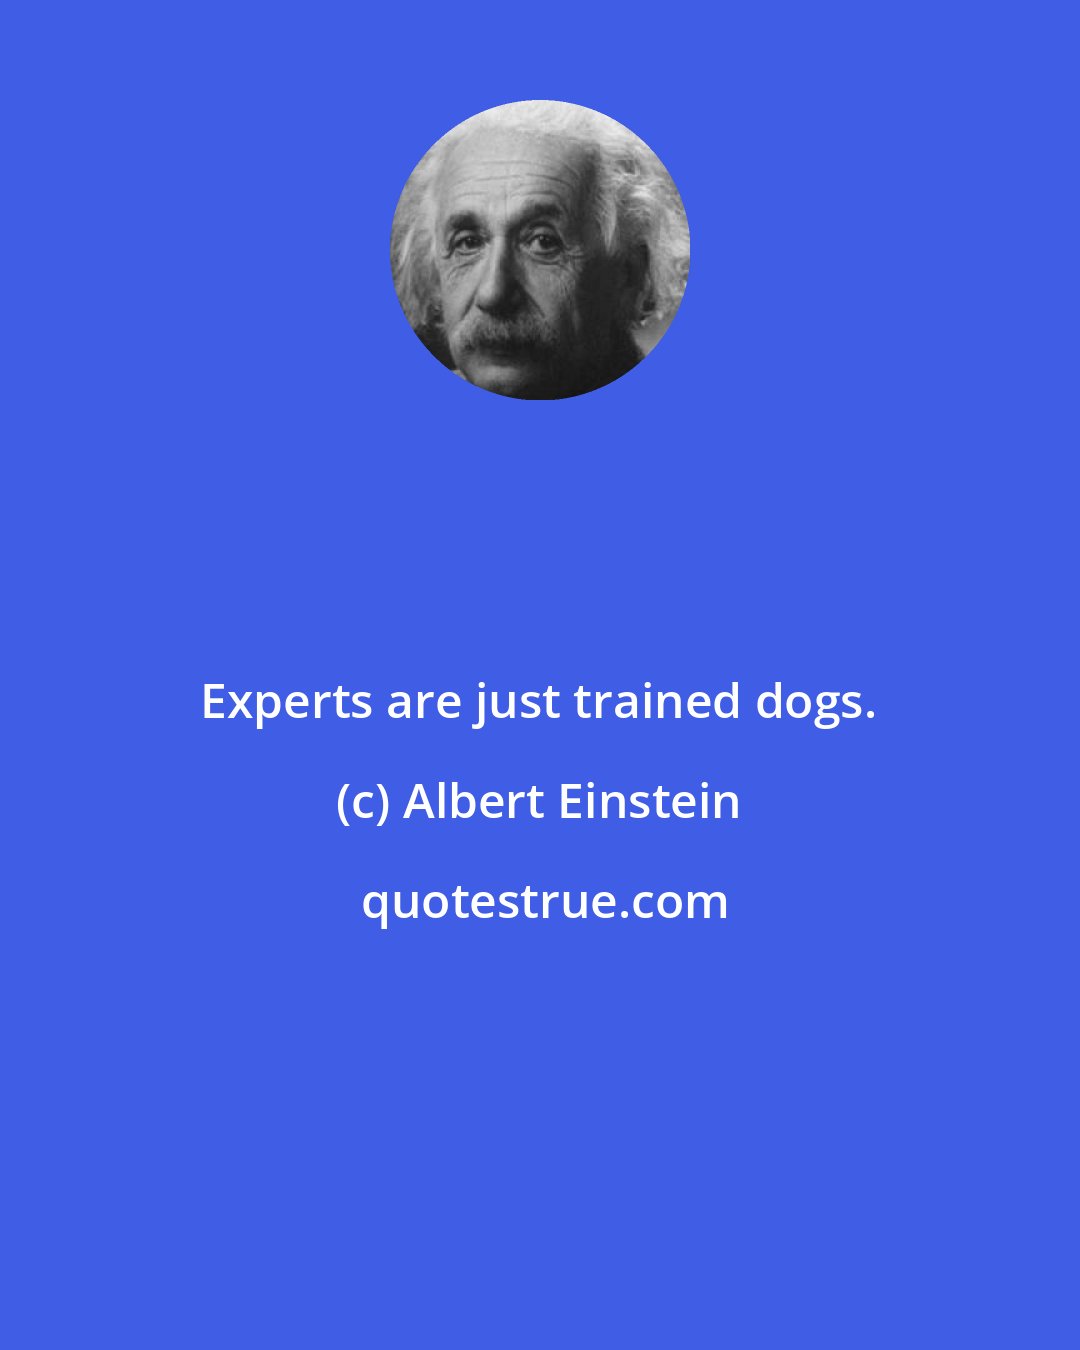 Albert Einstein: Experts are just trained dogs.